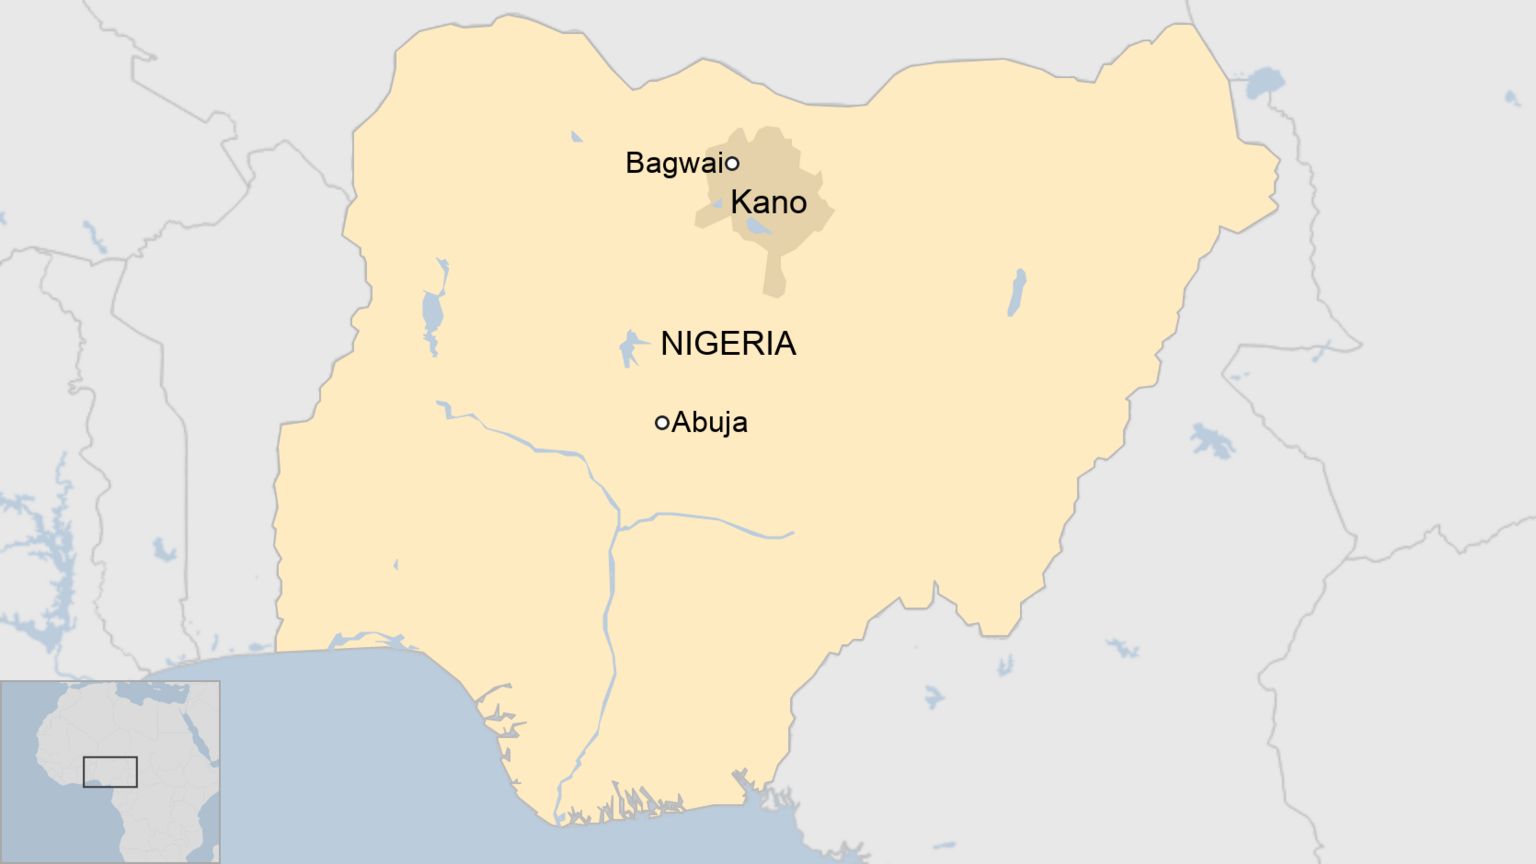 Map of Nigeria showing Bagwai